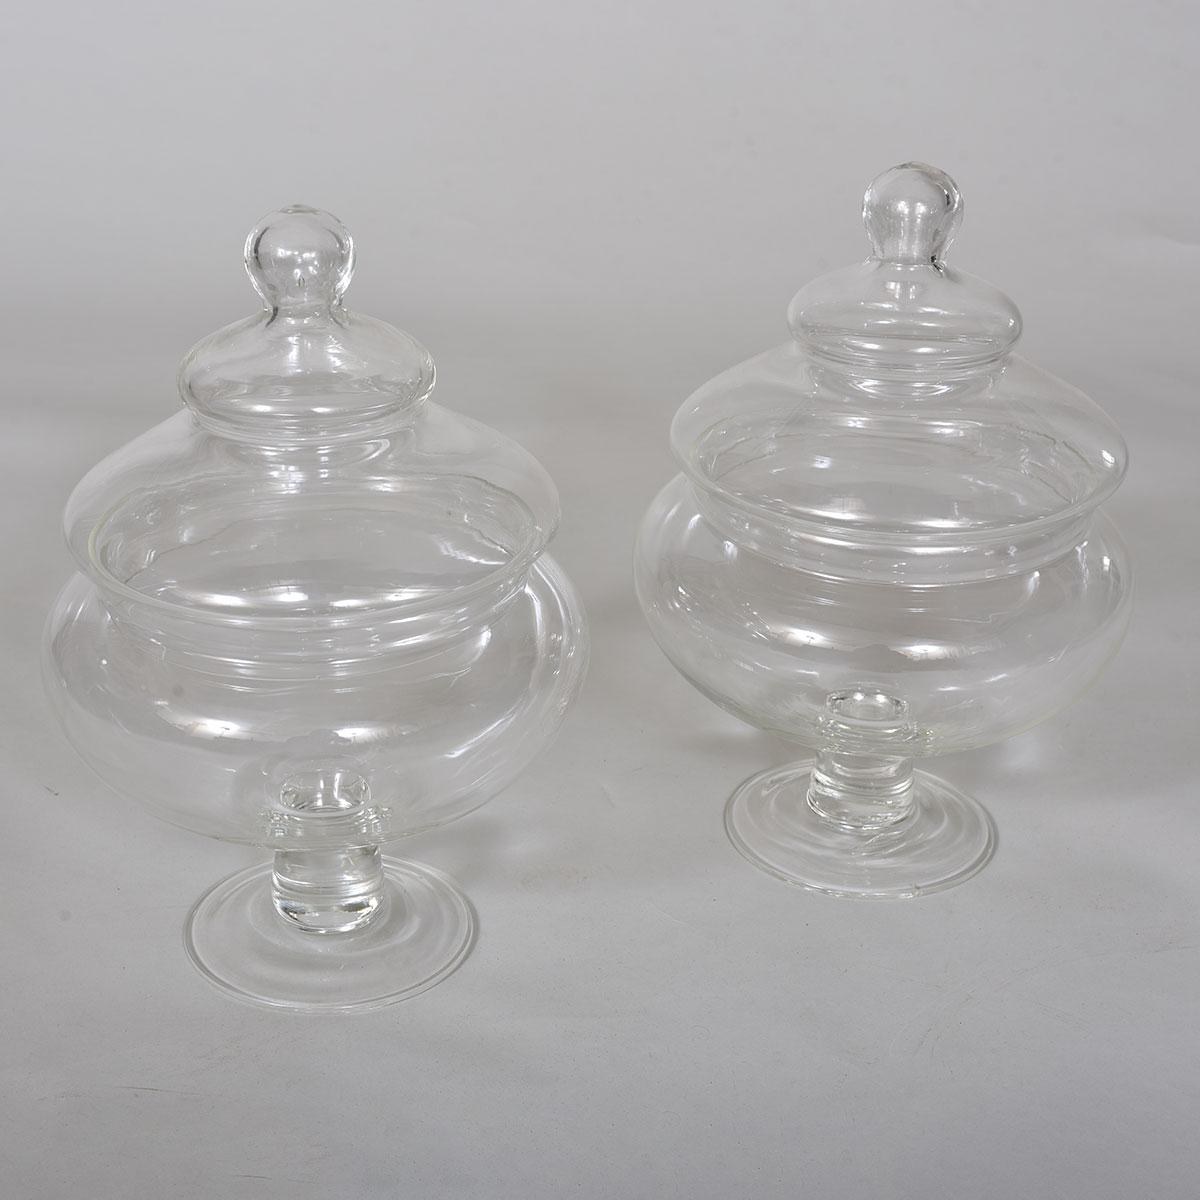 Pair of Late 19th century Glass Jars